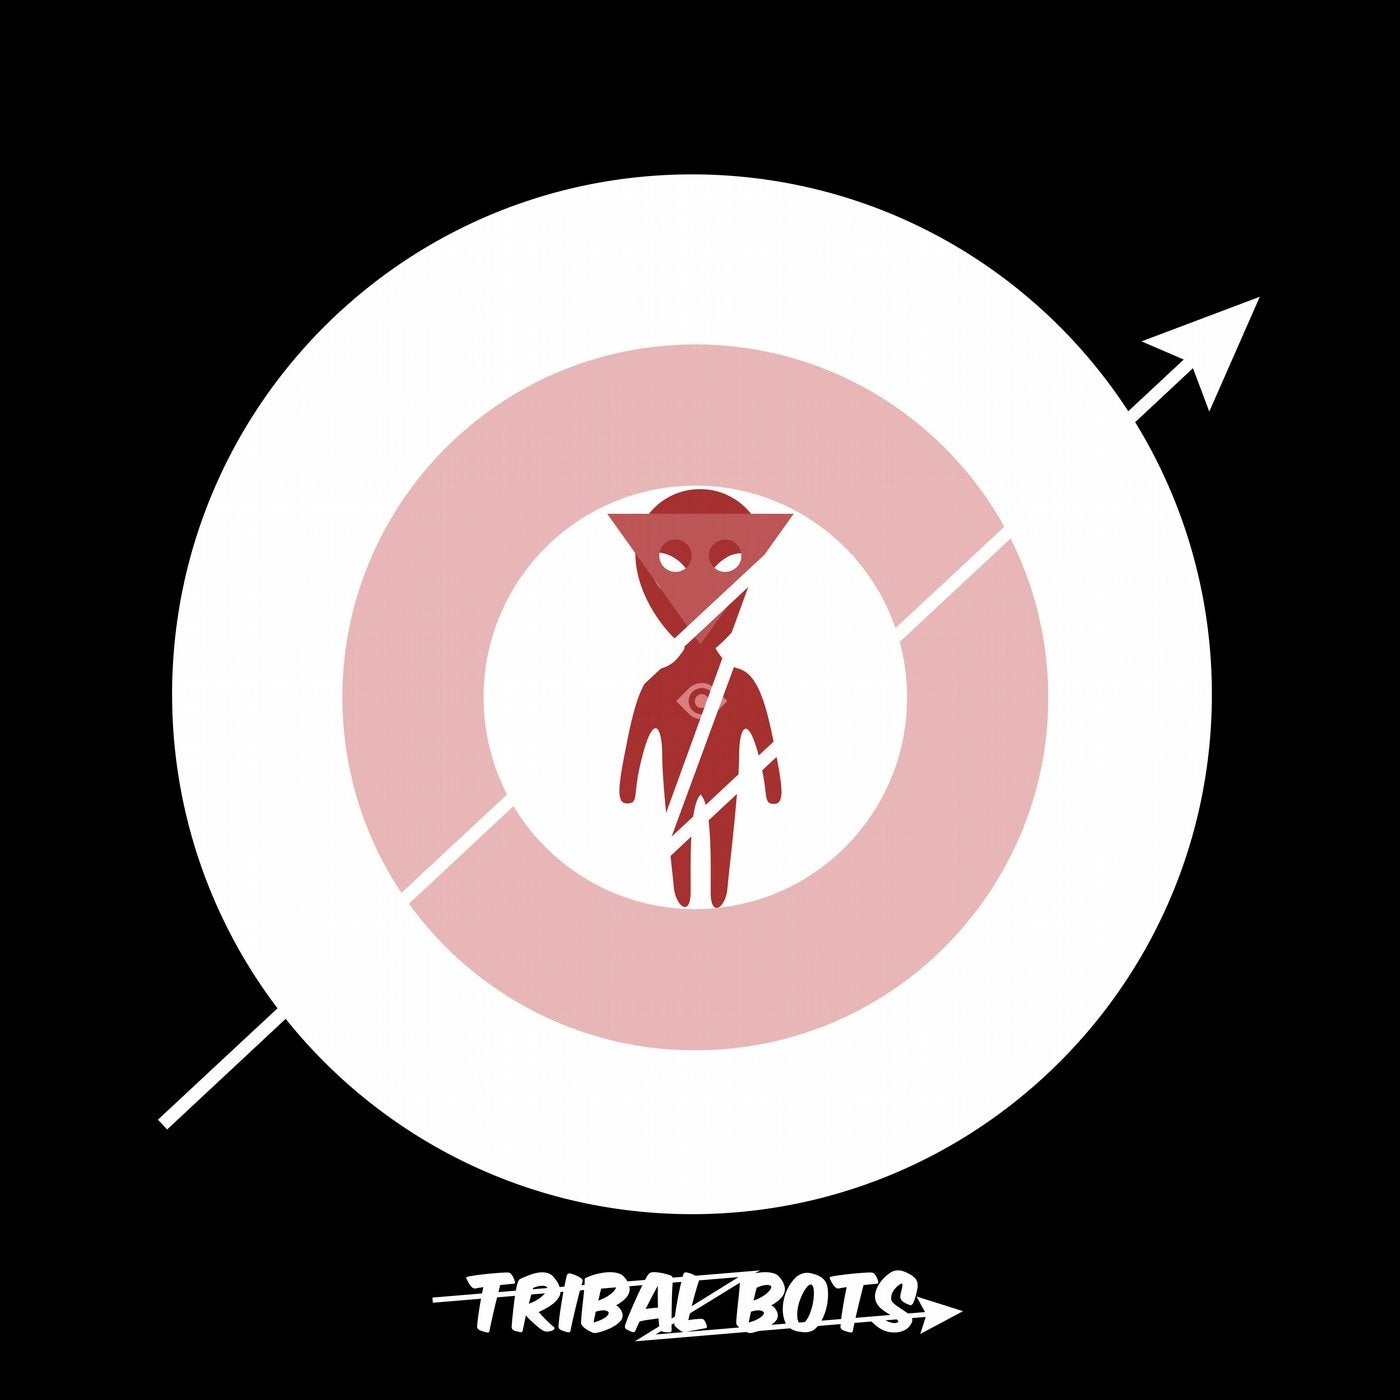 Tribal Bots